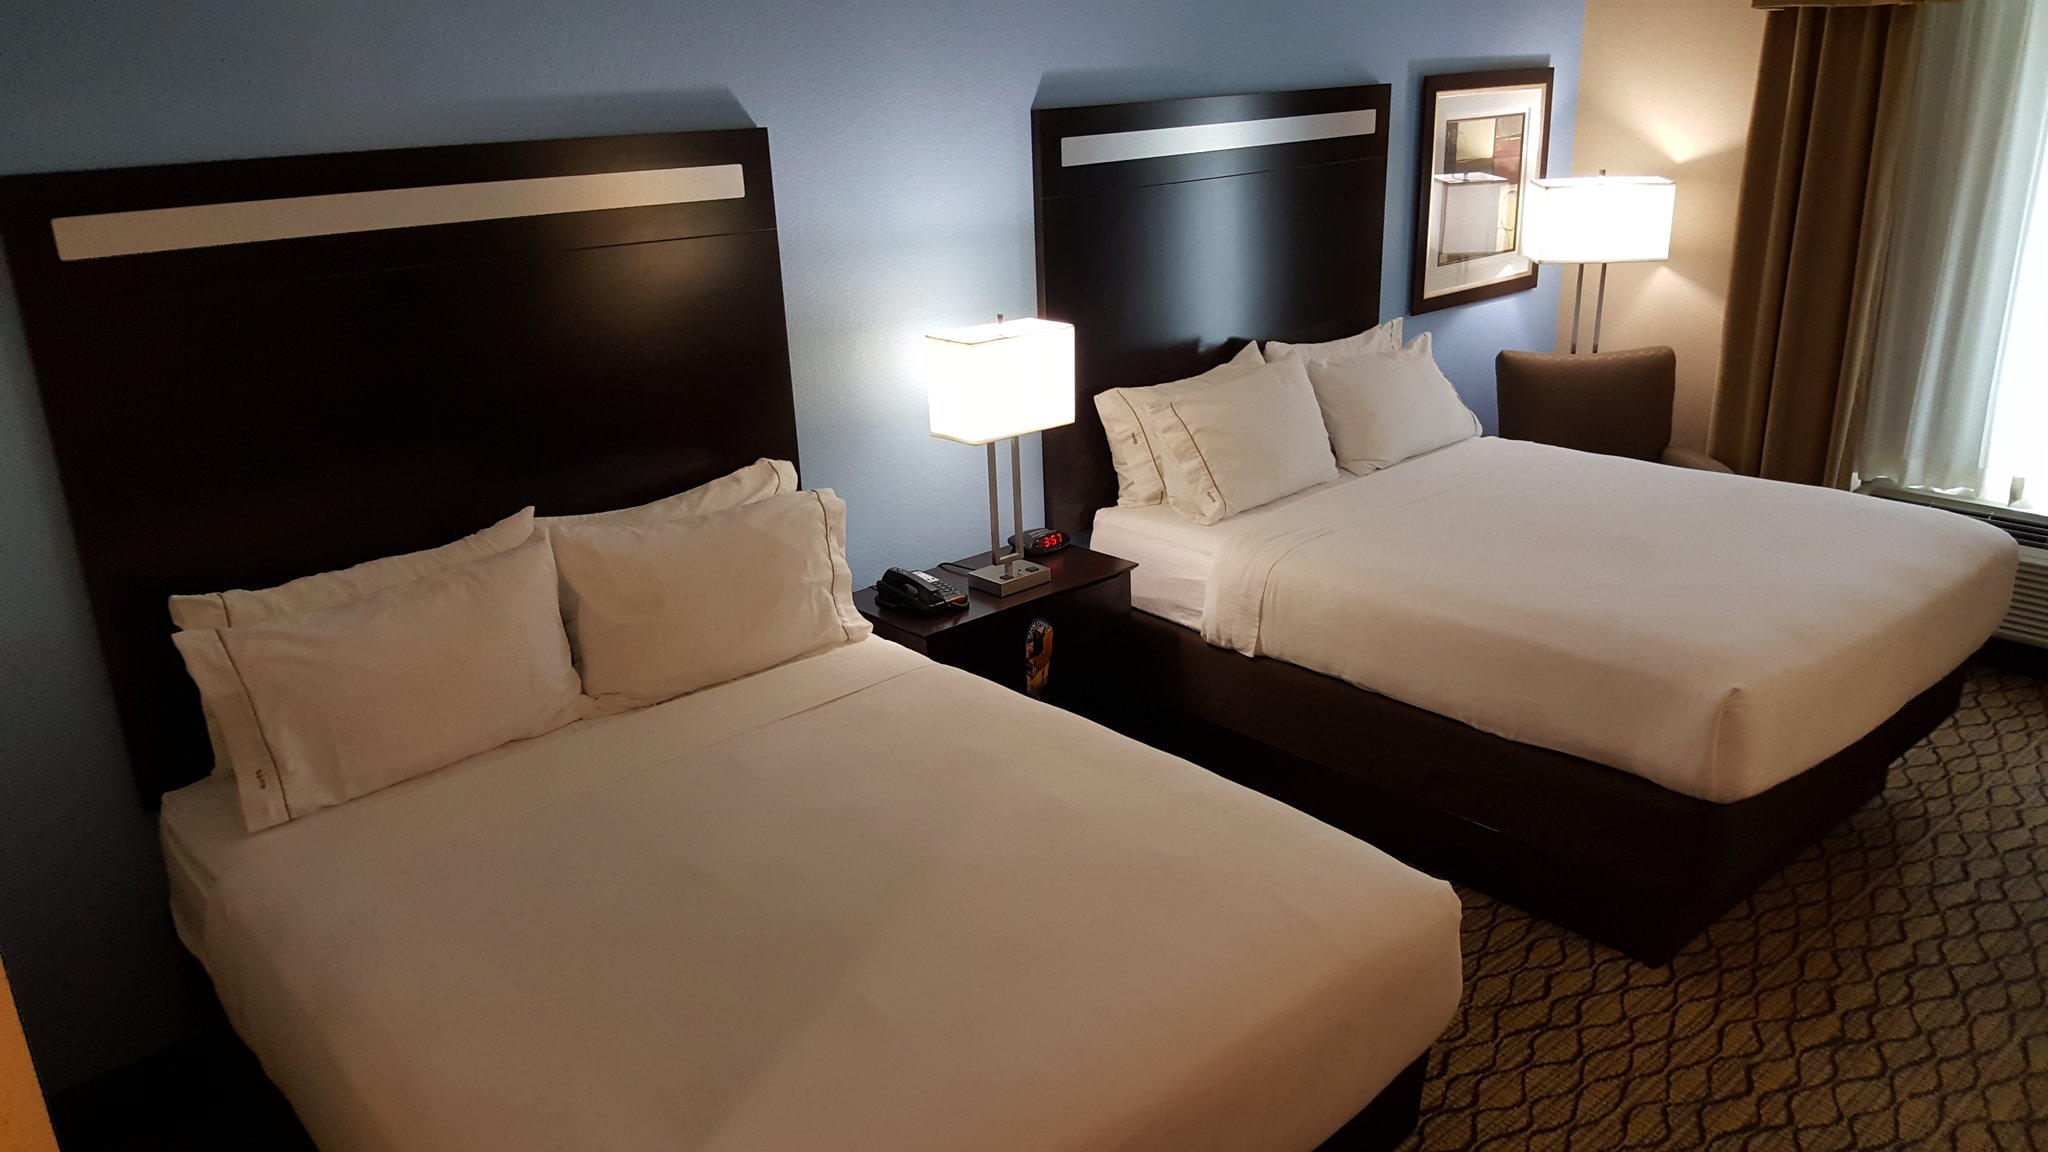 Holiday Inn Express & Suites Atascocita - Humble - Kingwood Photo